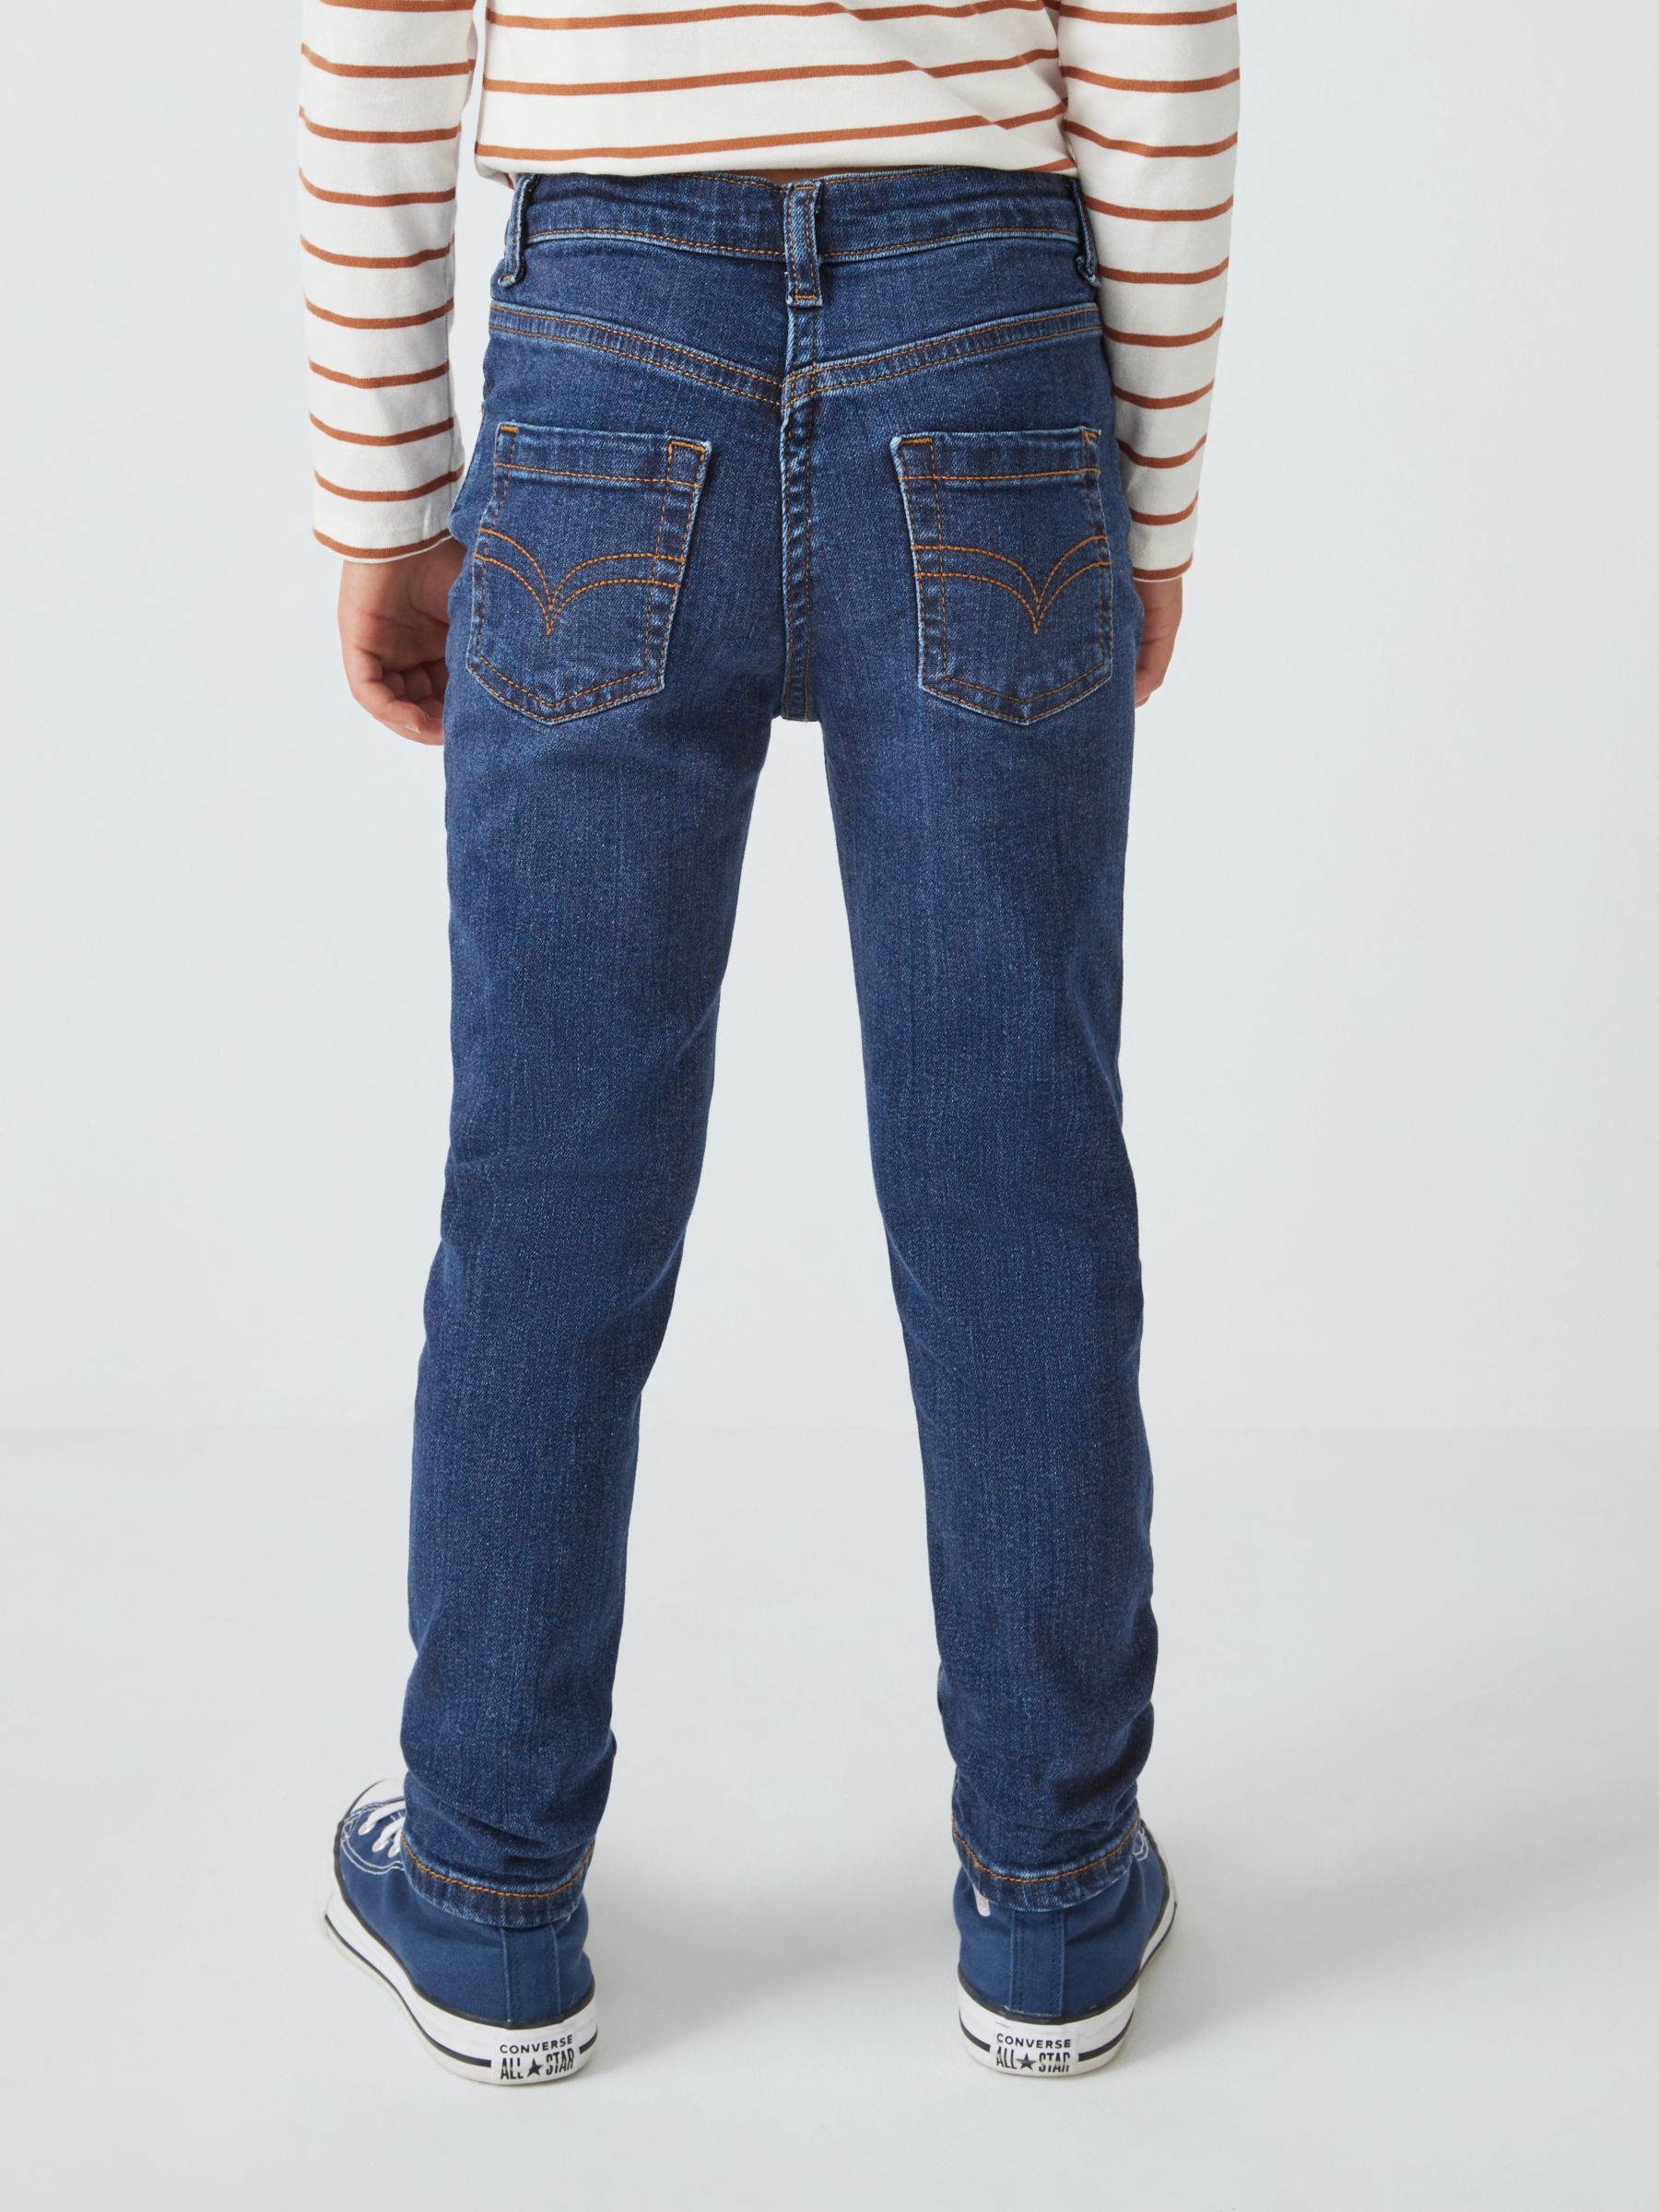 John Lewis Girl's Skinny Jeans, Mid Wash Denim at John Lewis & Partners